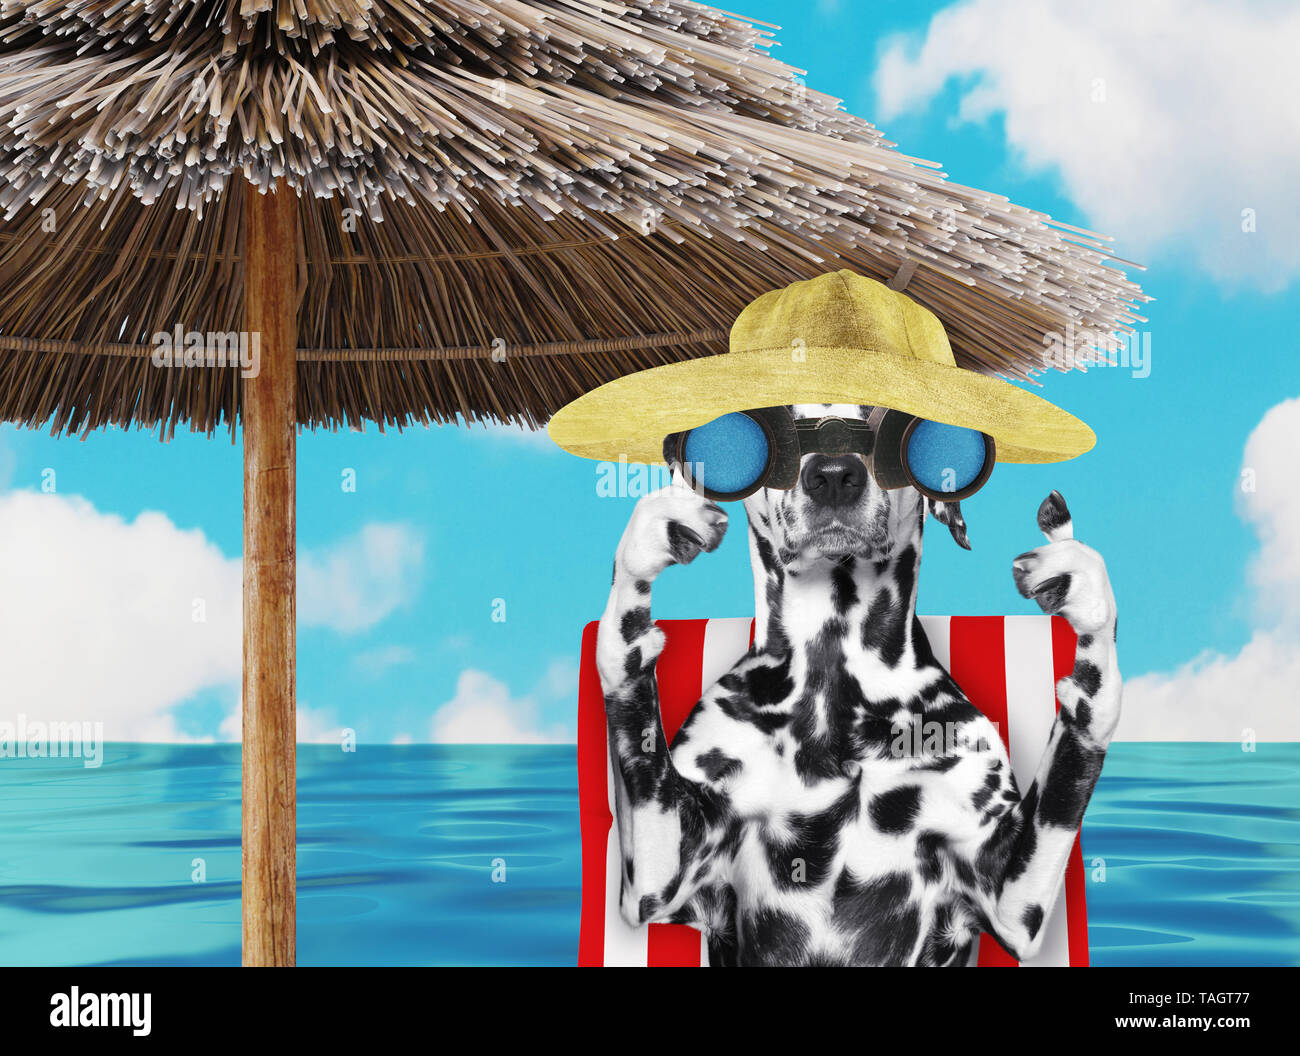 Dalmatian dog sunbathing on a beach chair and looking through binoculars. 3d render Stock Photo